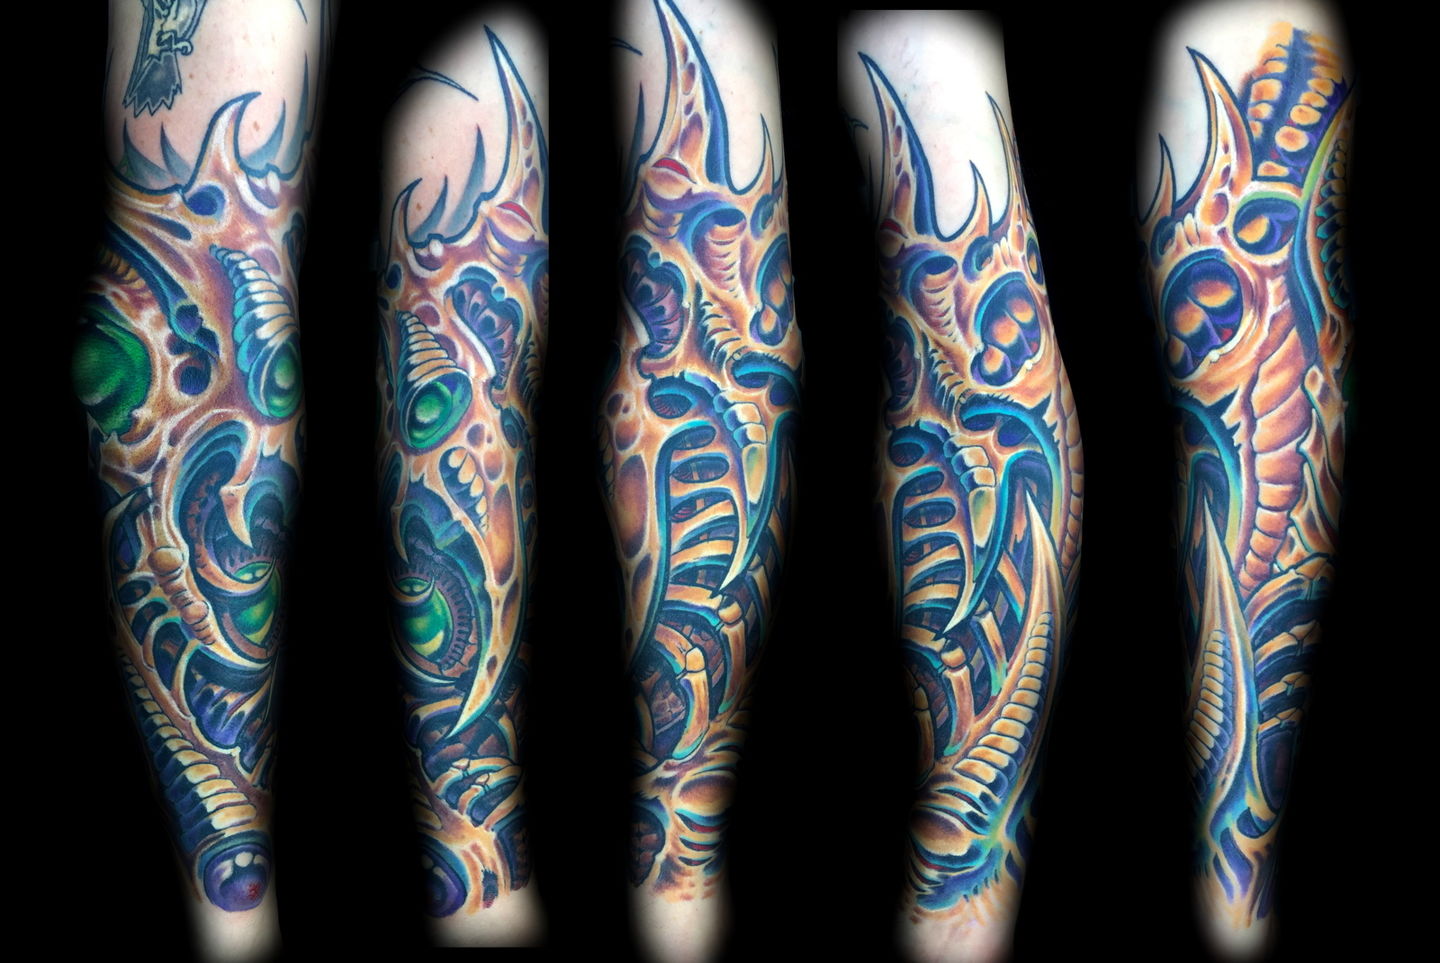 Las-vegas-tattoo-artist_joe-riley_gold-biomech-sleeve